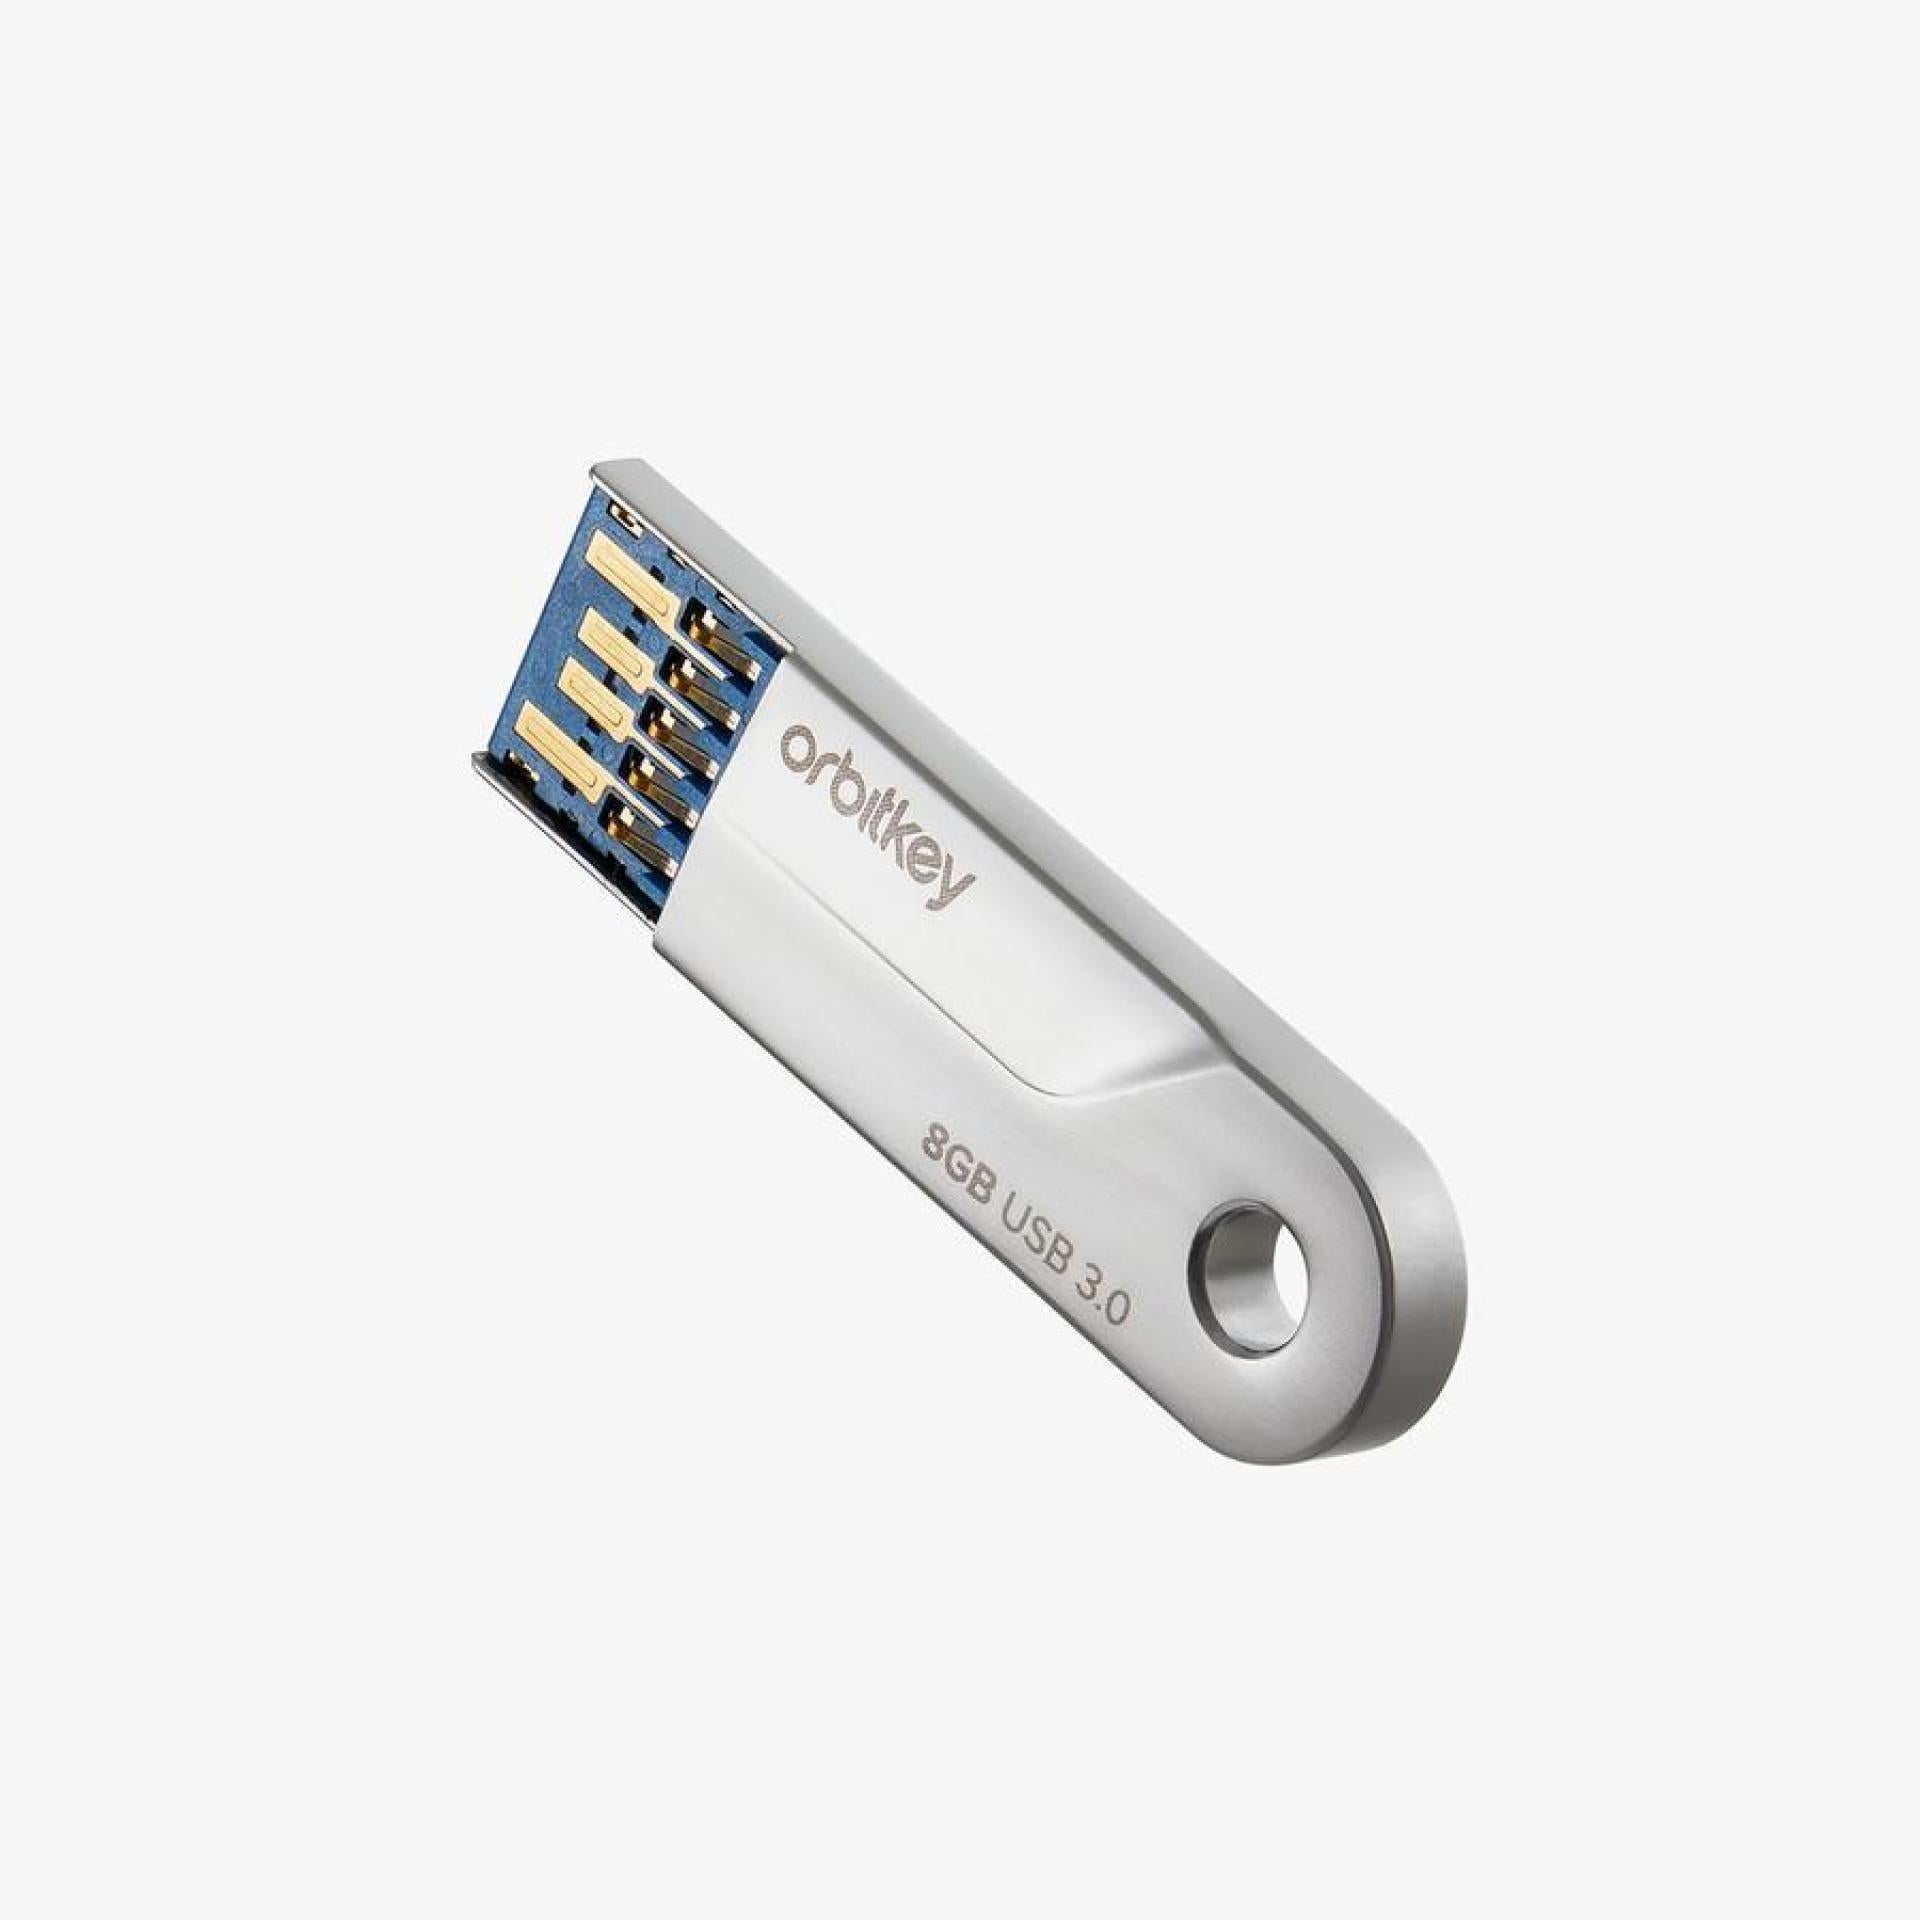 Orbitkey Key Organiser 2.0 Zubehör USB-Stick 3.0 Kapazität 8 GB